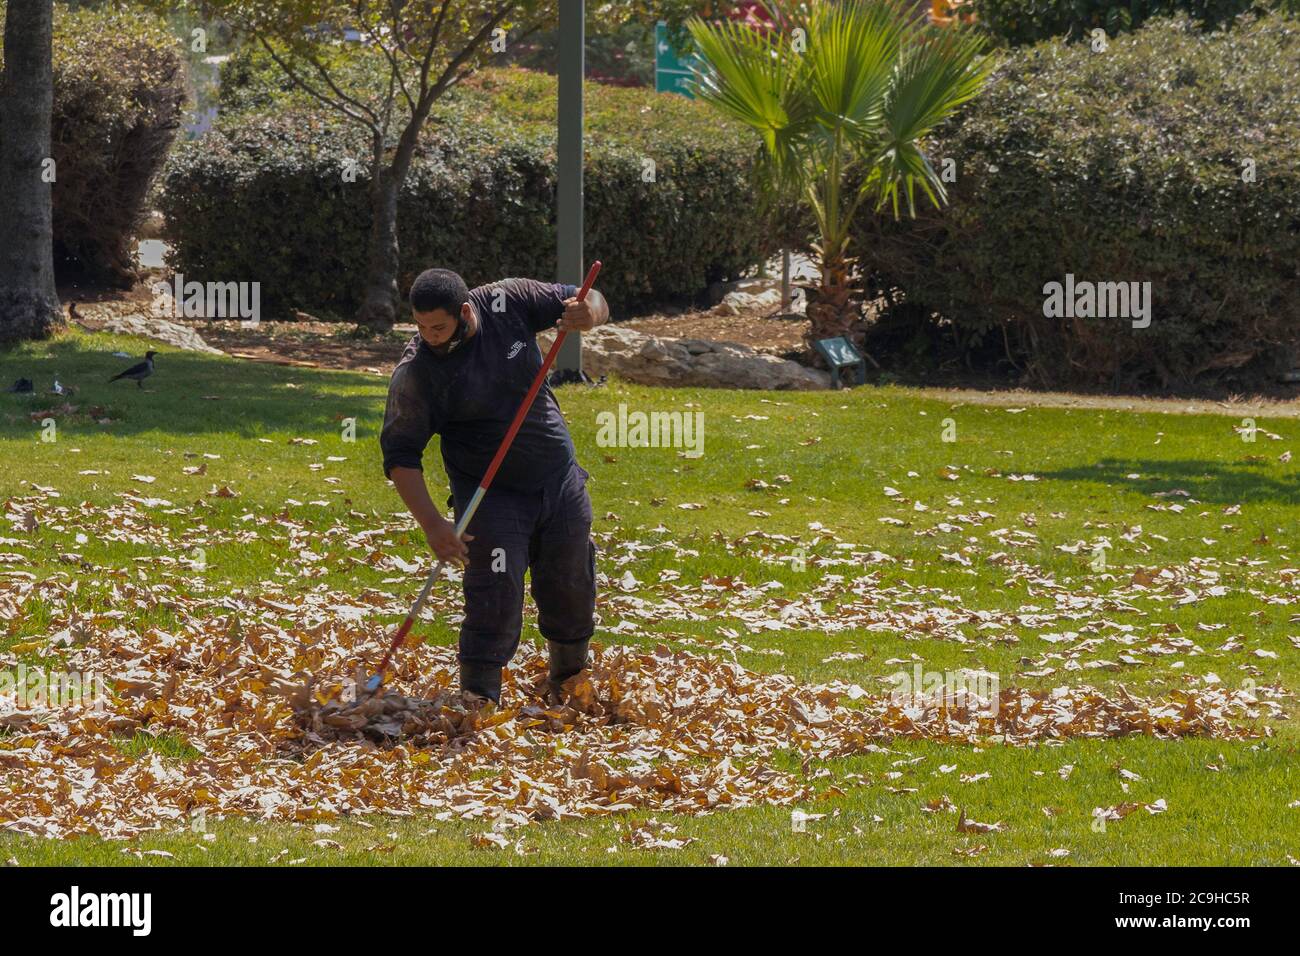 Jerusalem, Israel - July 30th, 2020: A park maintenance man sweeps away fallen leaves, wearing a COVID mask. Stock Photo